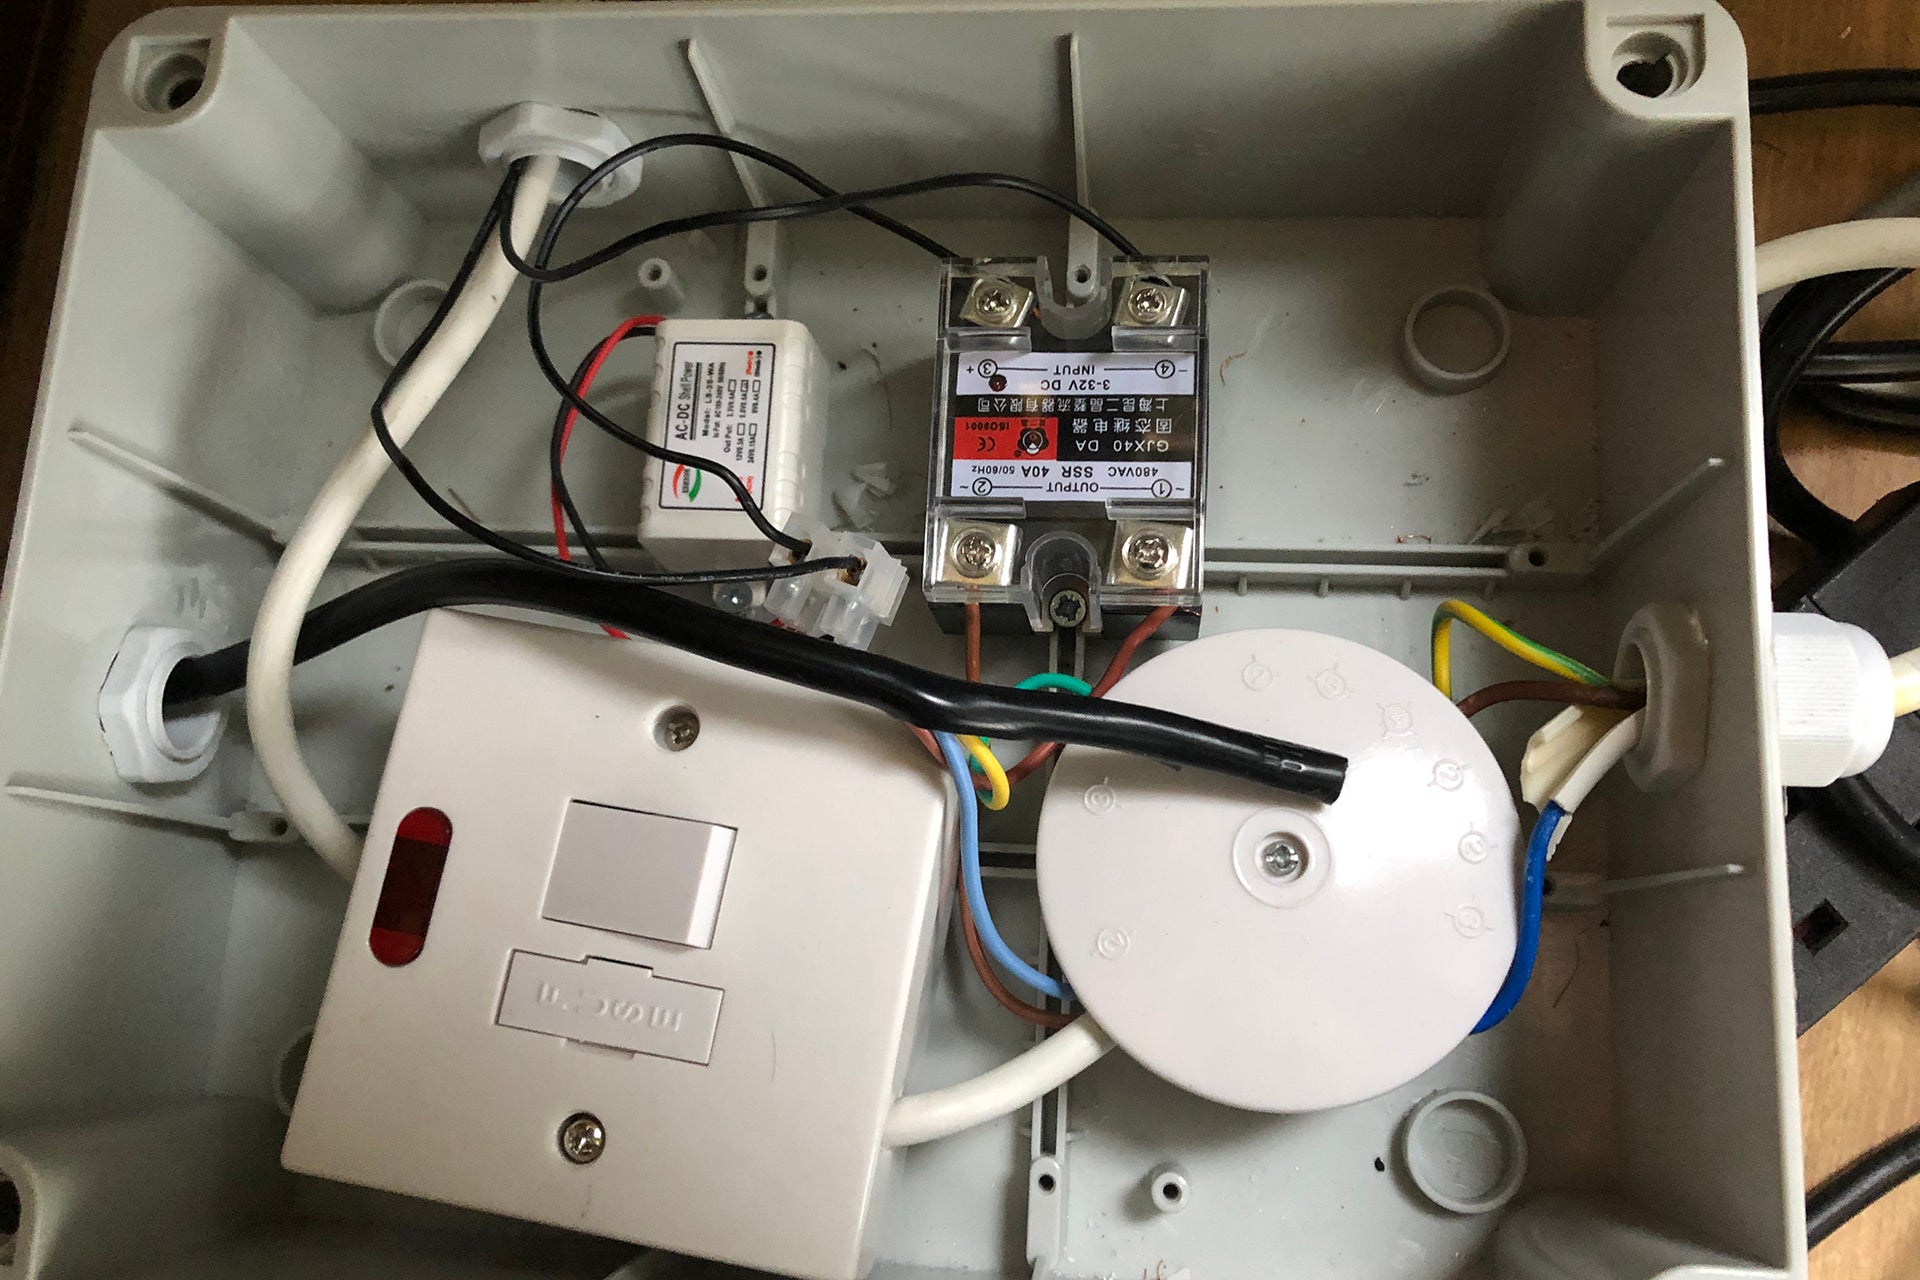 Tado Smart Thermostat Connector